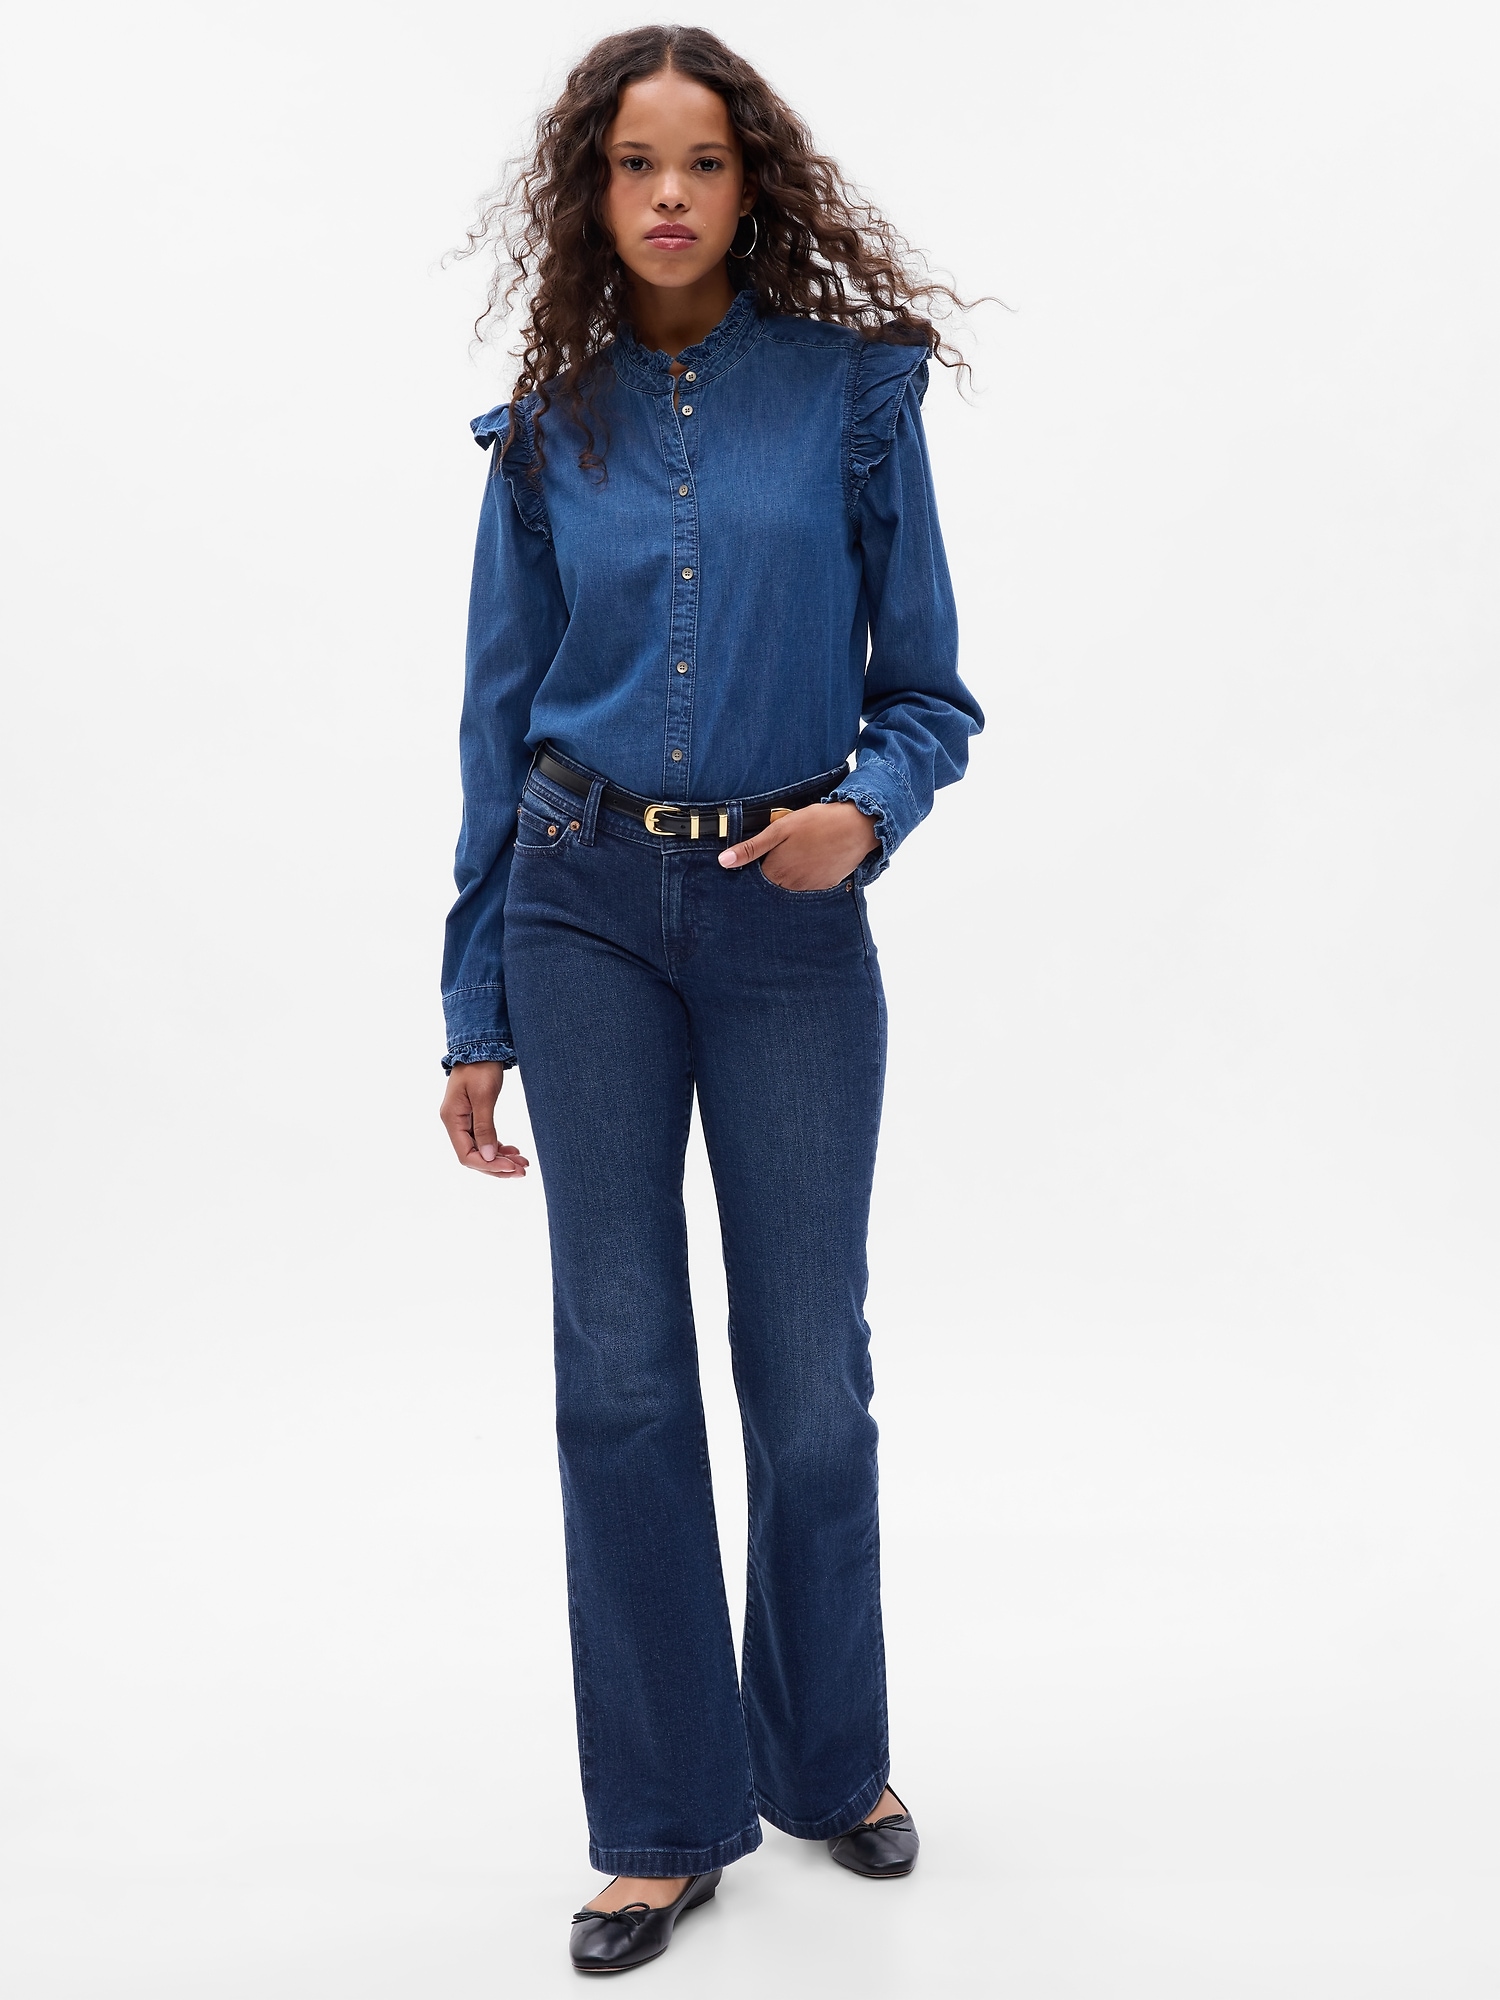 Women's Low-Rise Medium Wash Flare Jeans, Women's Sale